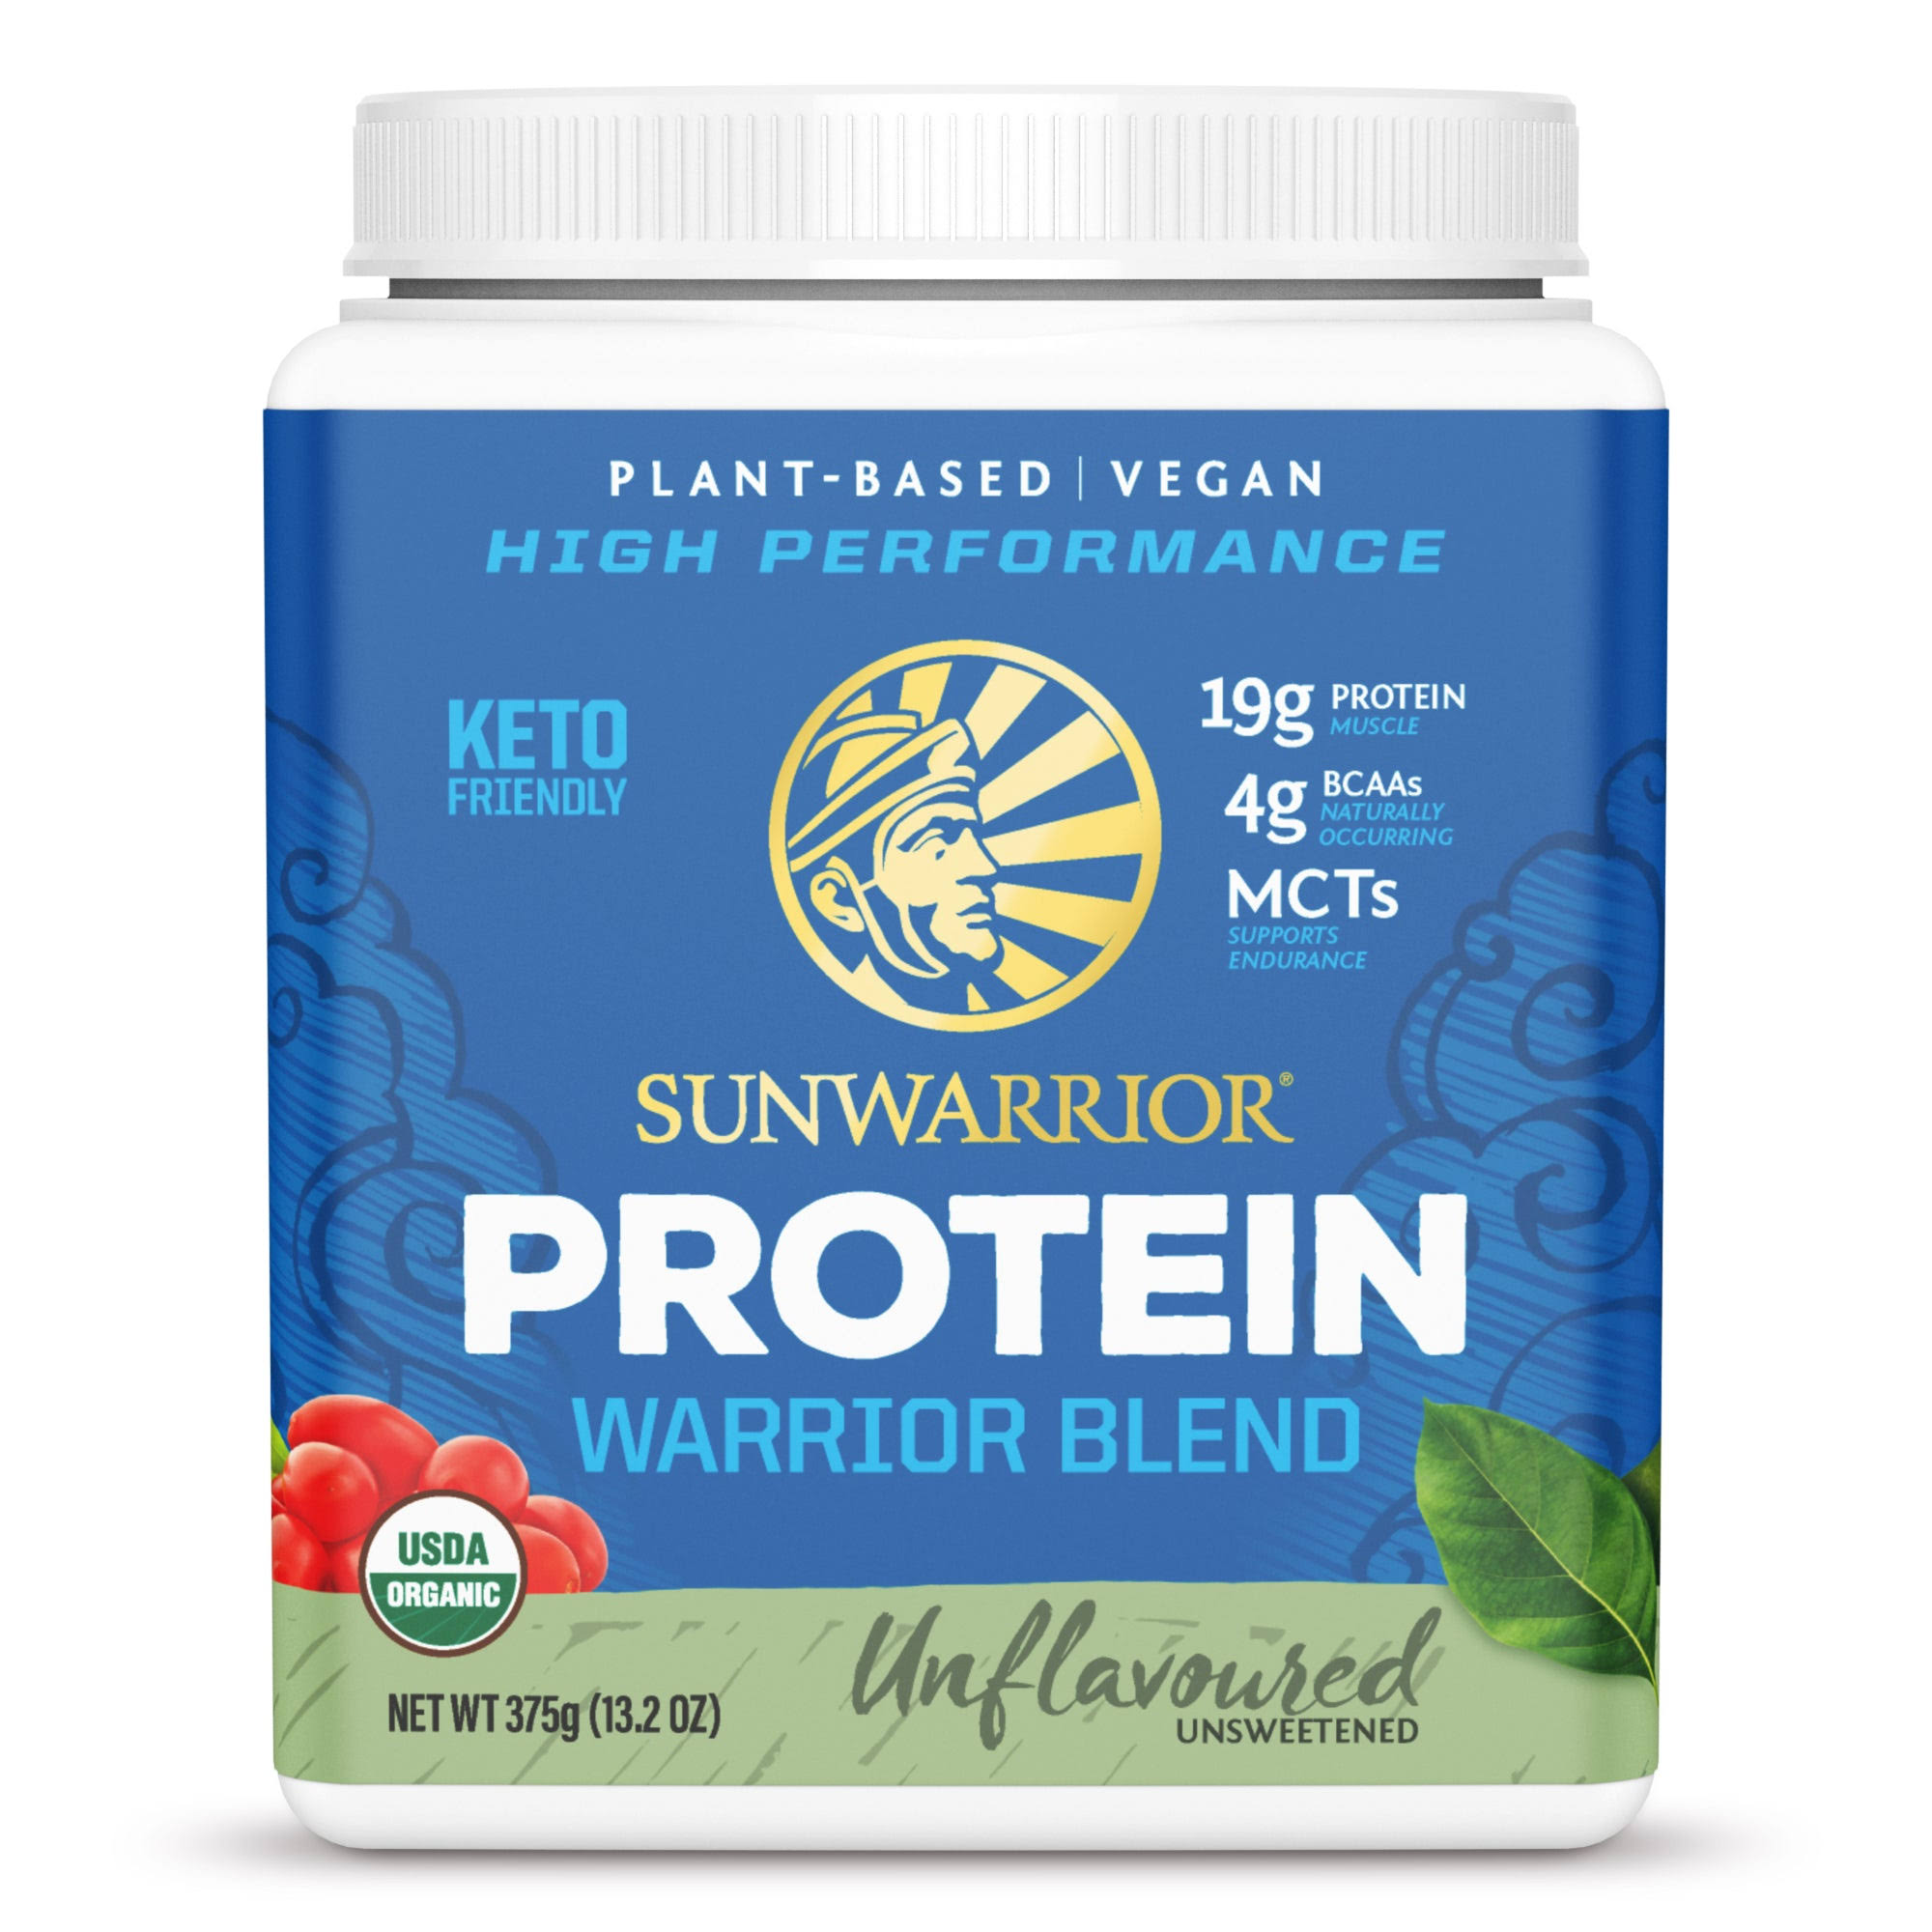 Sunwarrior Warrior Blend Plant-Based Organic Protein Supplement - Natural, 13.2oz